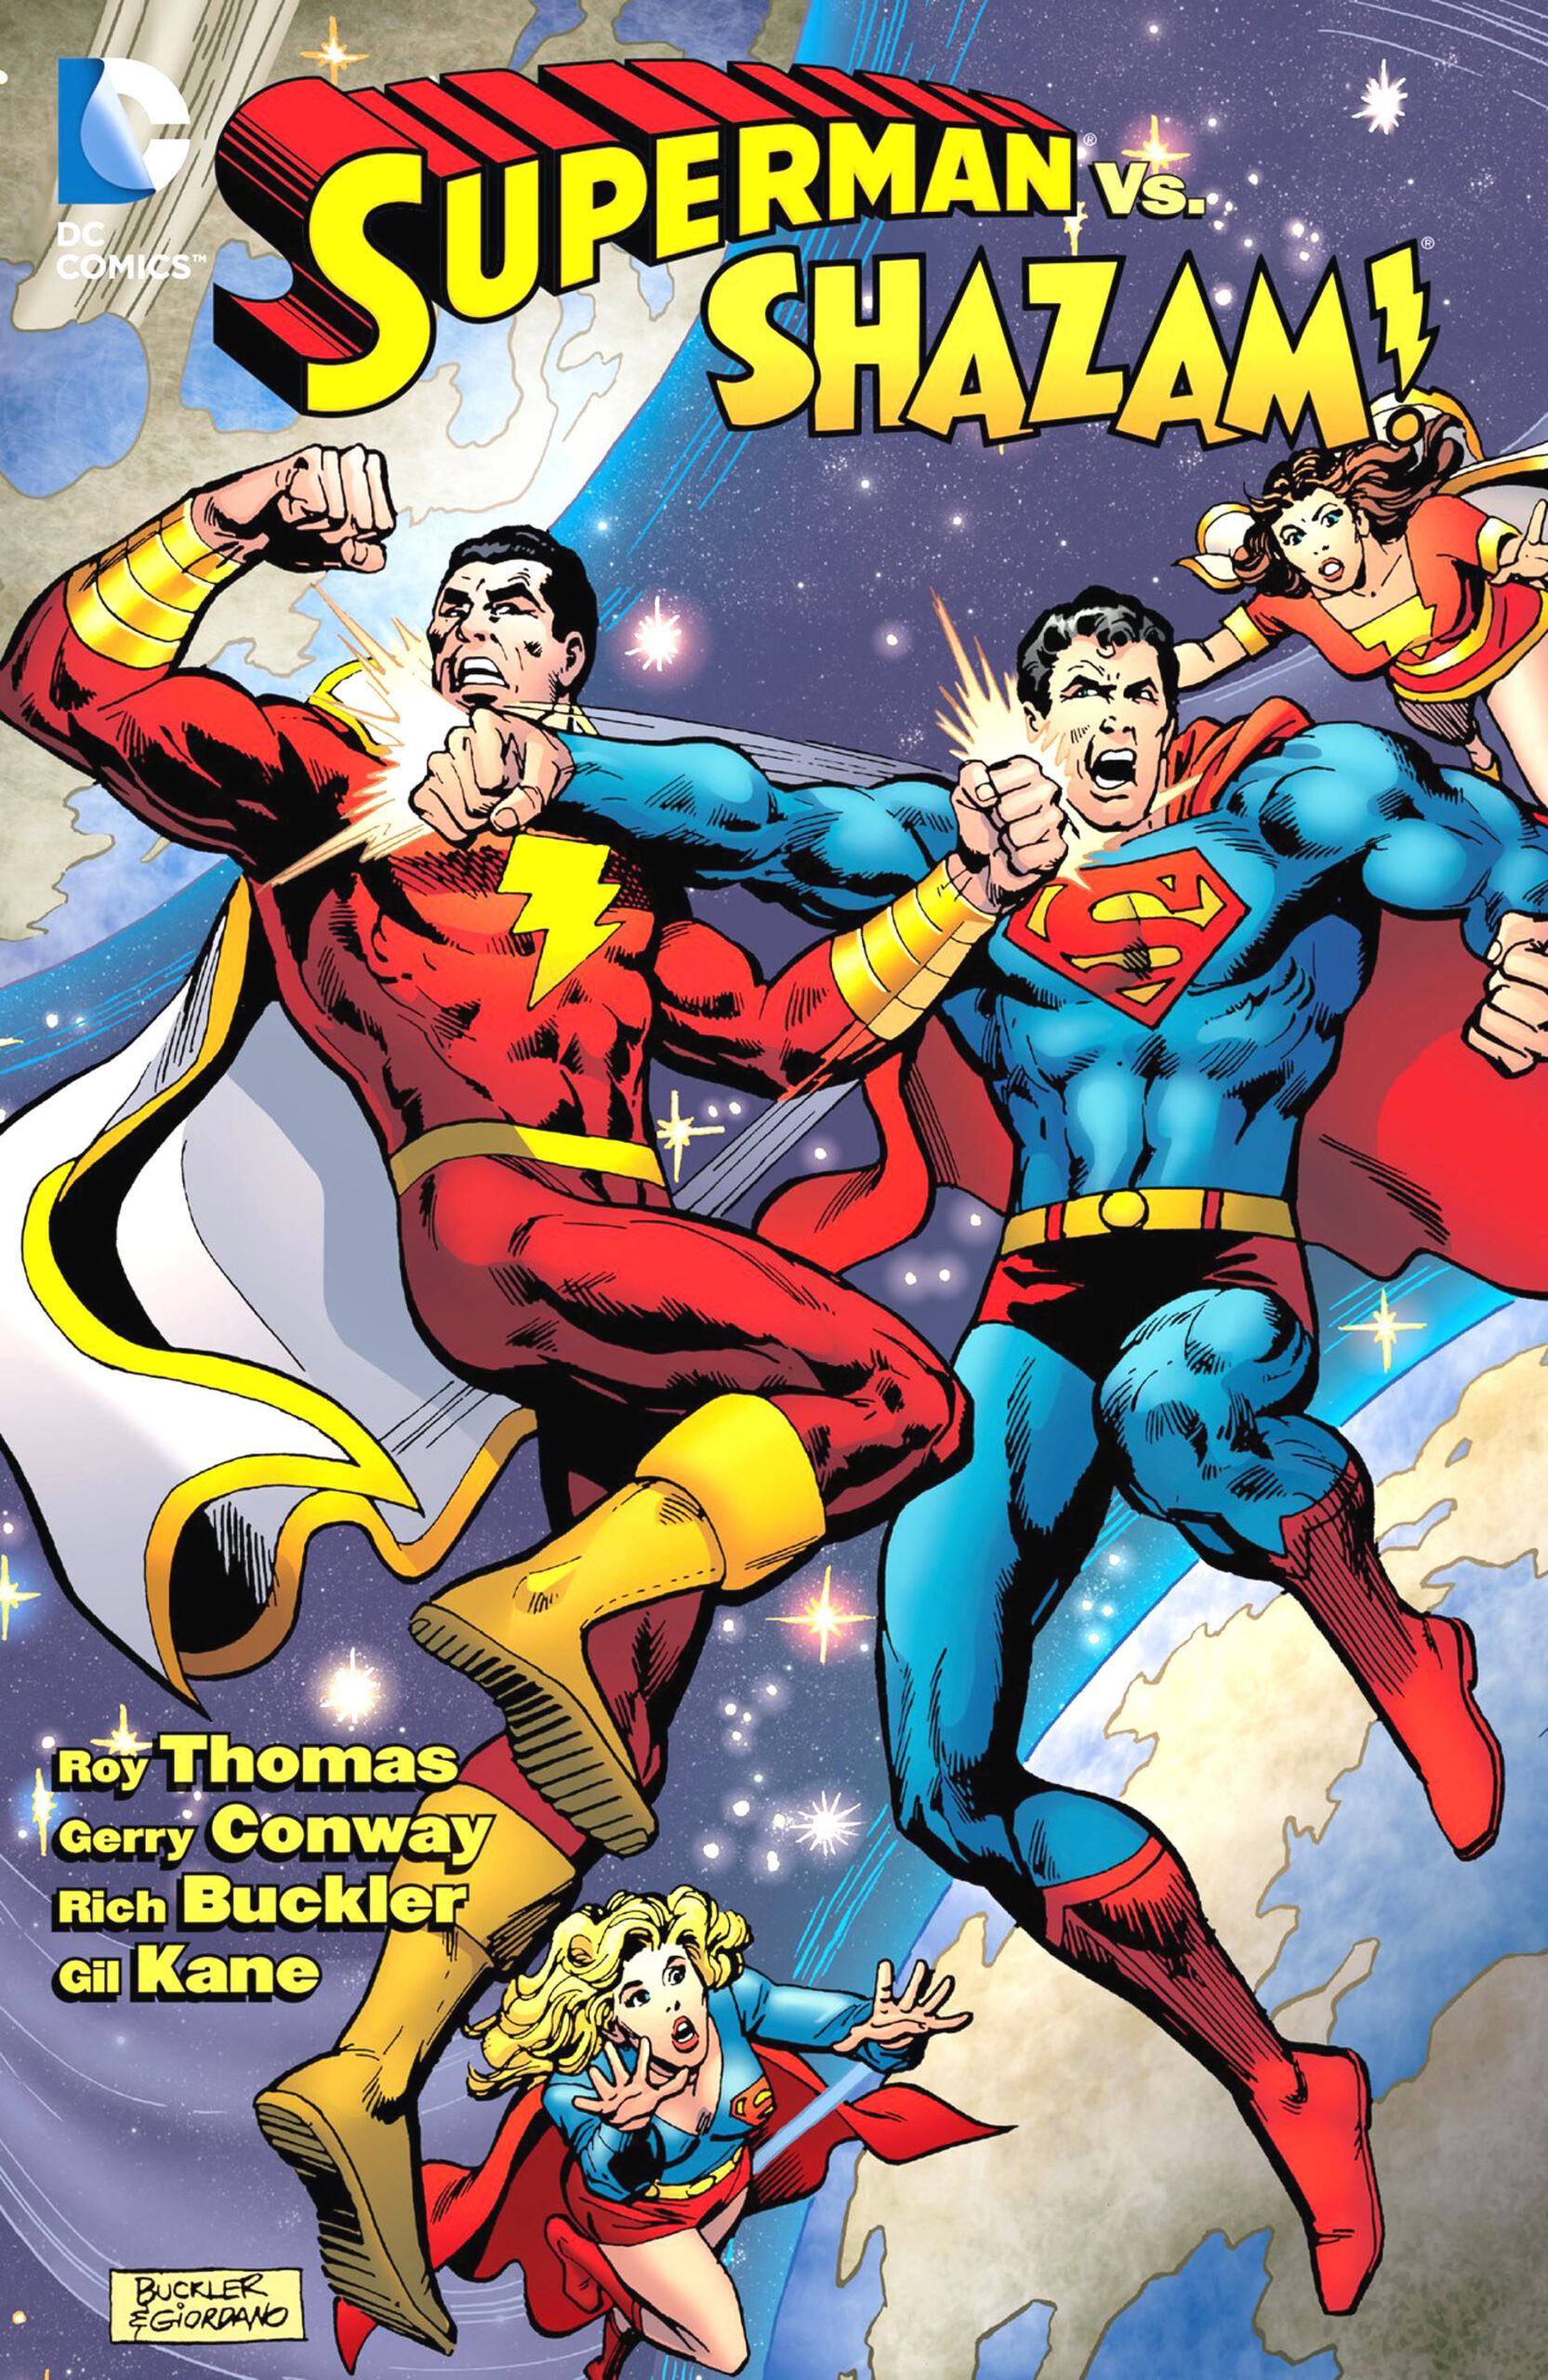 Is Superman Un-American? - Superman - Comic Vine